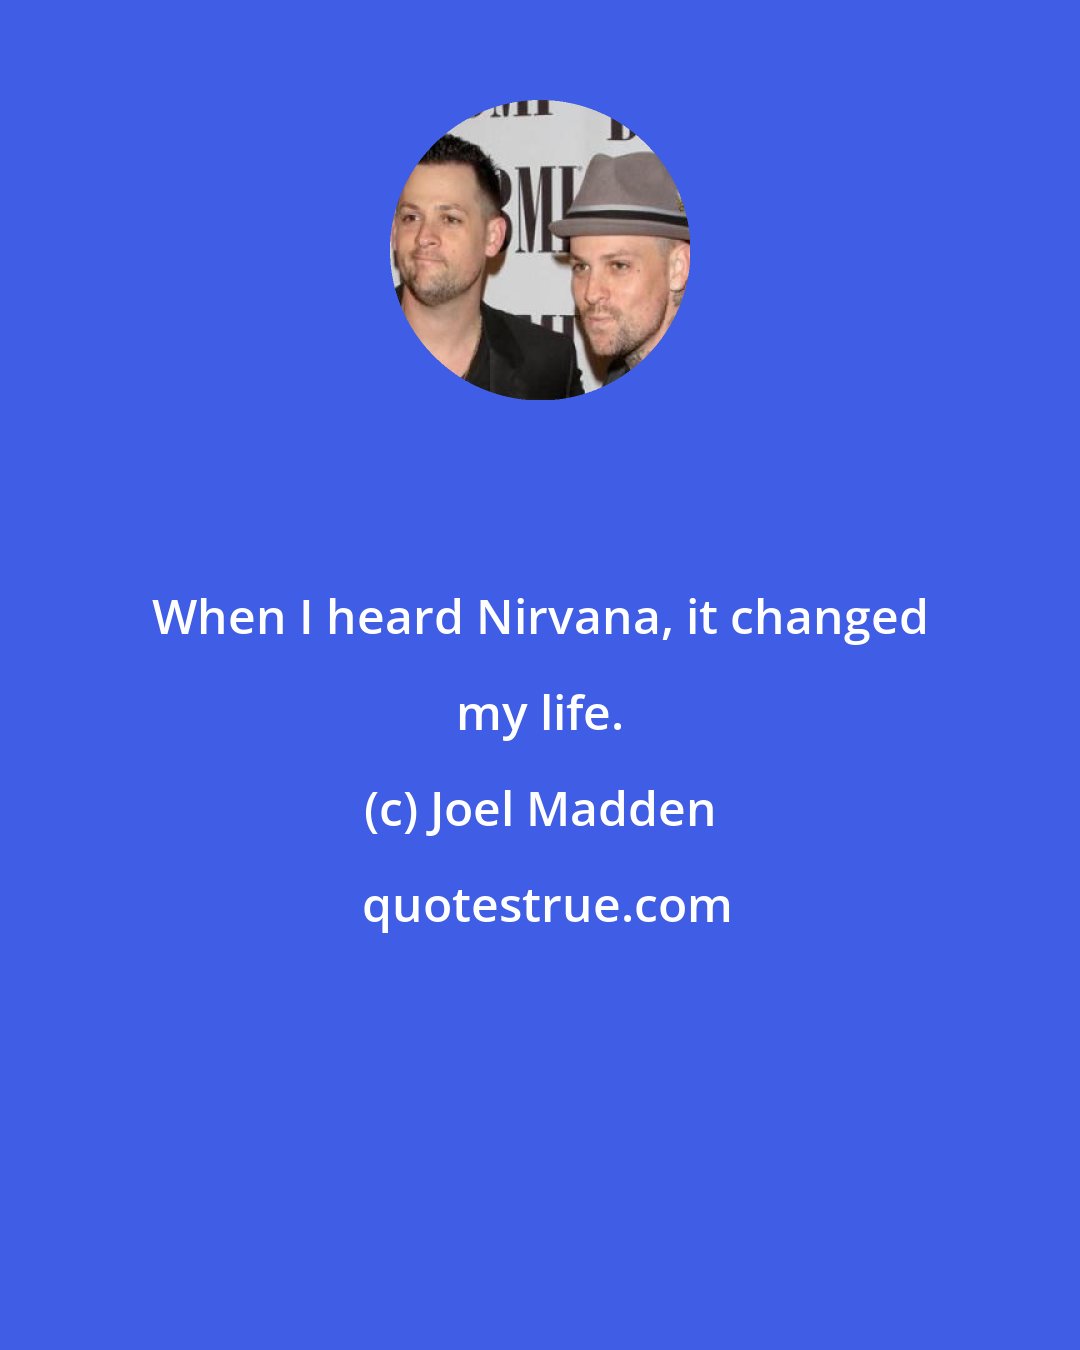 Joel Madden: When I heard Nirvana, it changed my life.